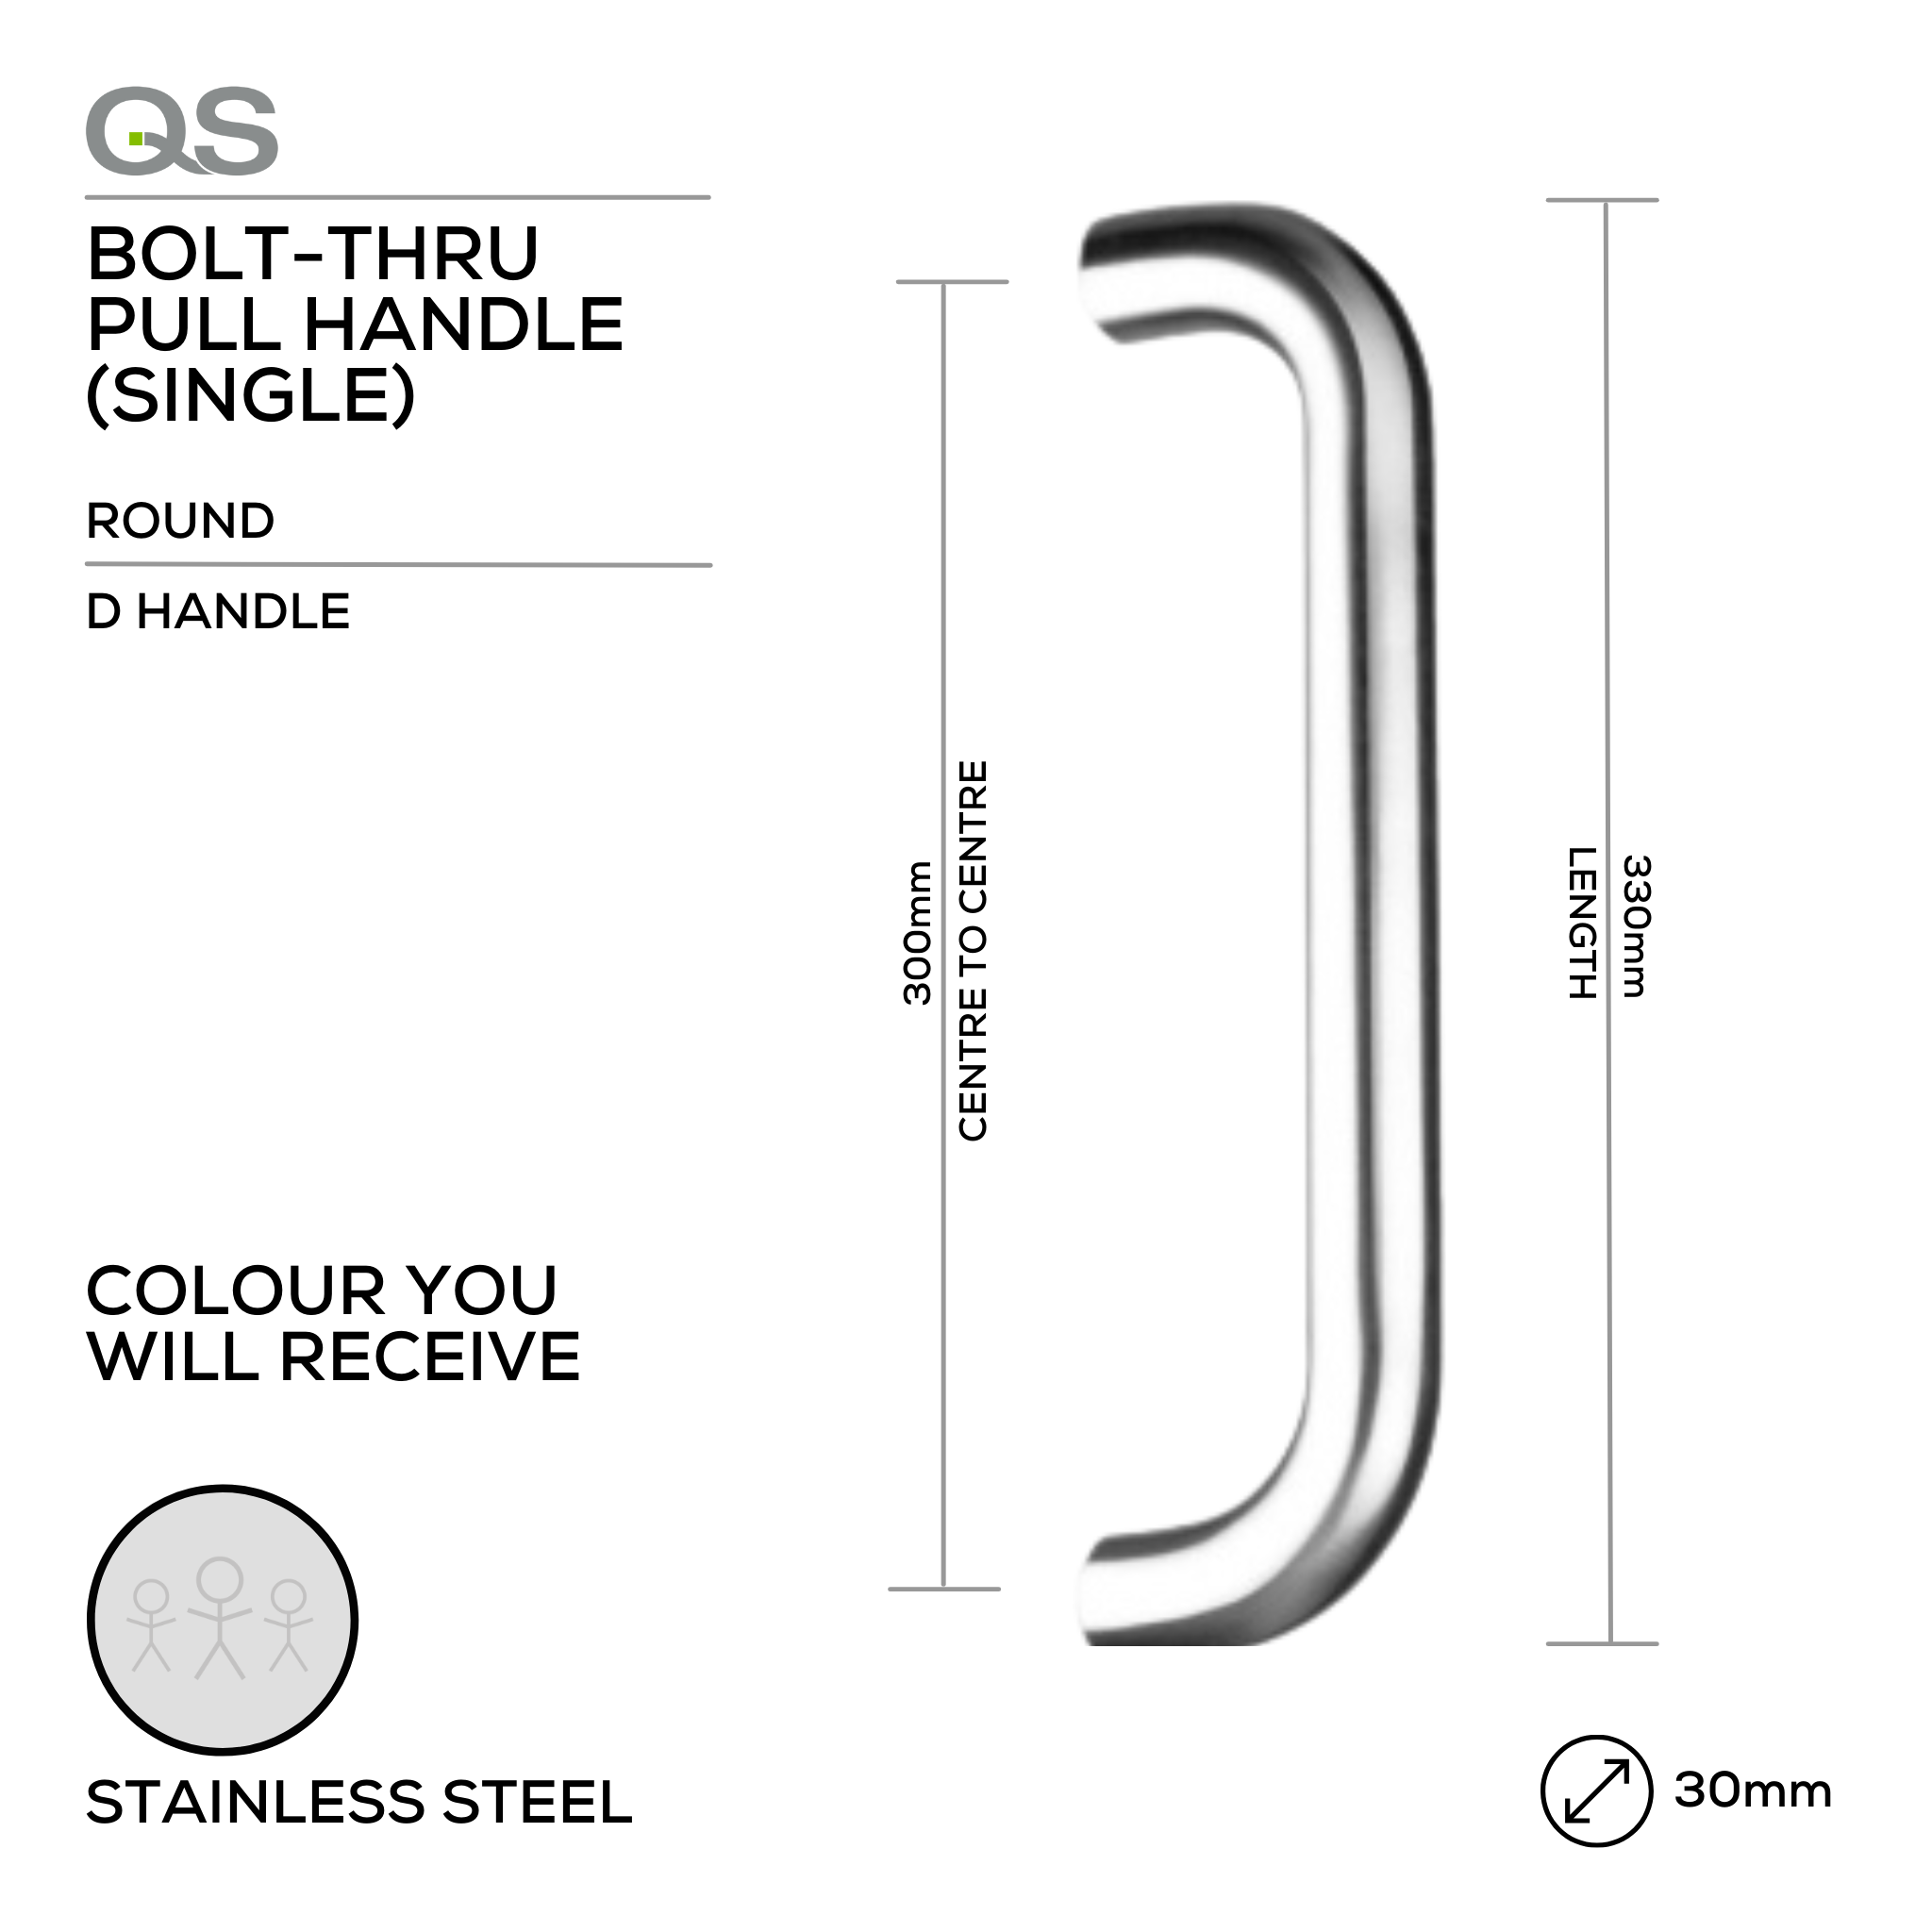 QS2201/1 D Handle, Pull Handle, Round, D Handle, BoltThru, 30mm (Ø) x 330mm (l) x 300mm (ctc), Stainless Steel, QS